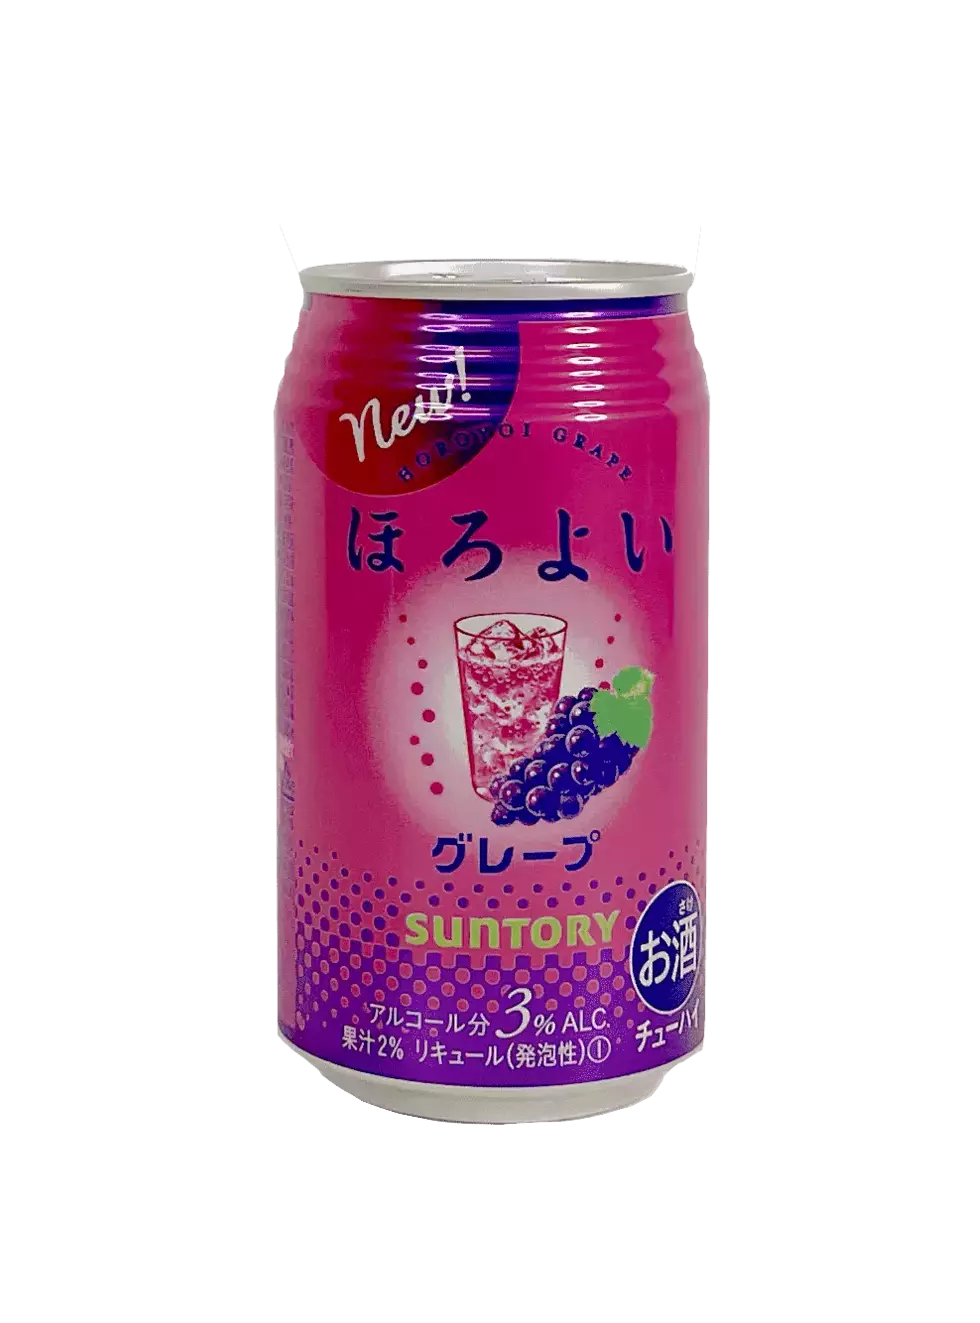 Horoyoi 葡萄 风味 含3%酒精度 350ml Suntory 日本